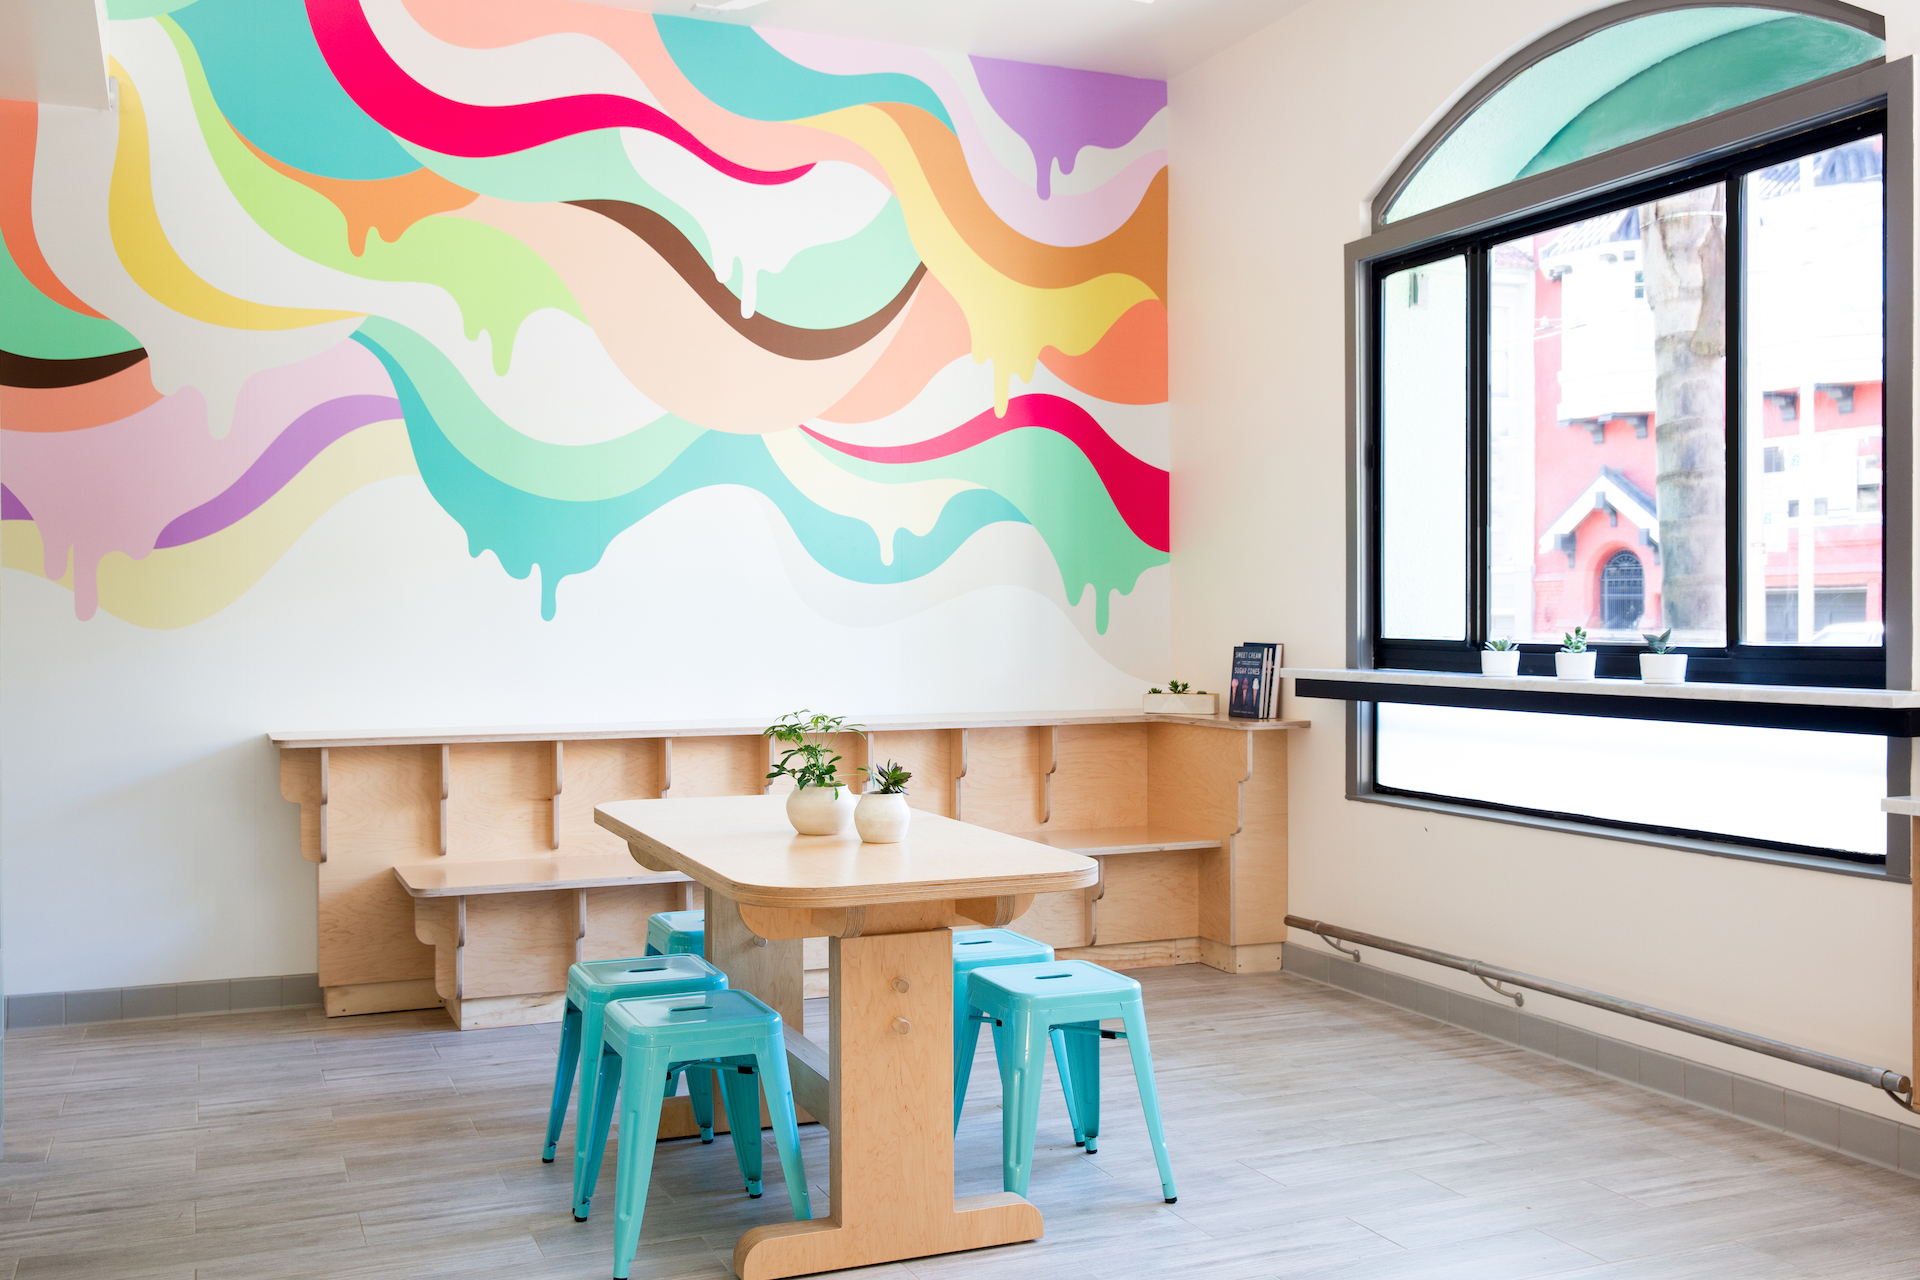 Bi-Rite Creamery's vibrant new ice cream-inspired mural